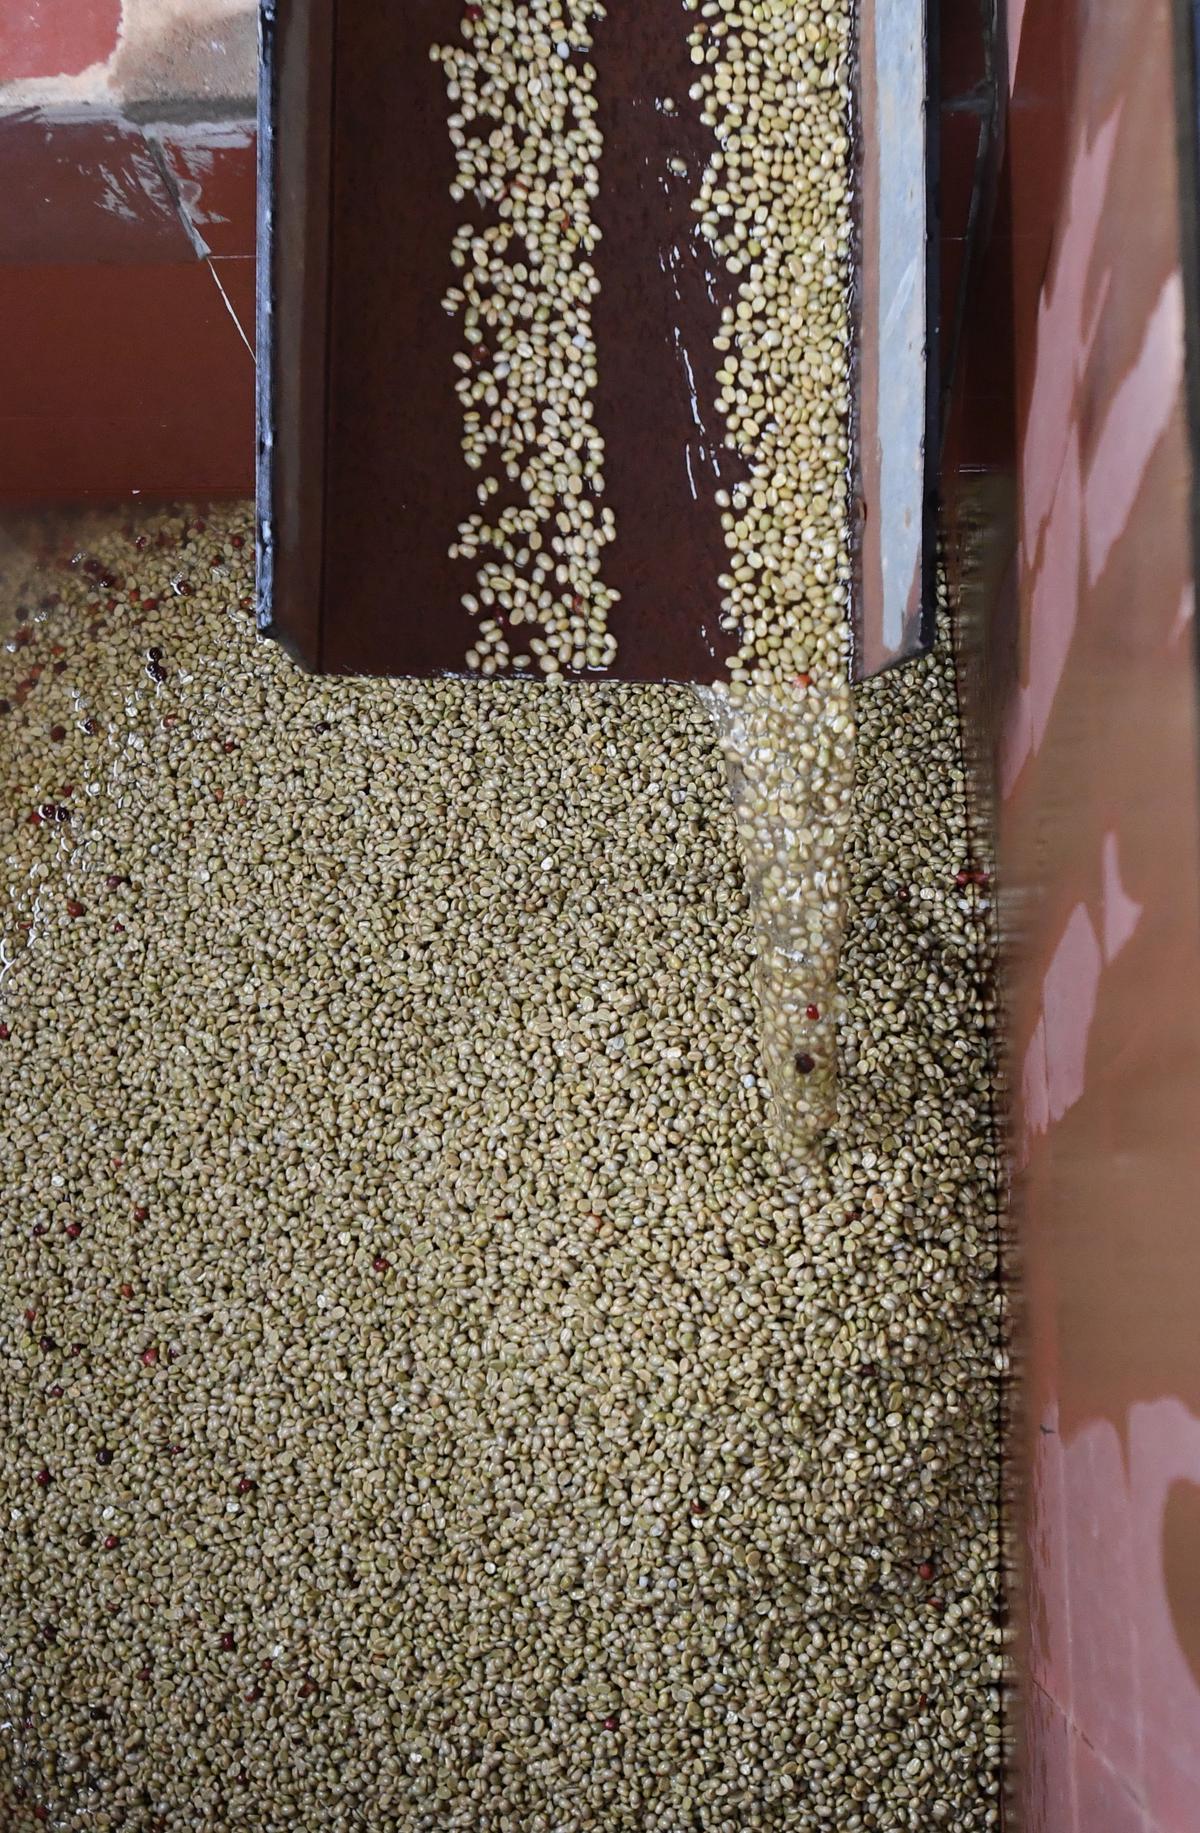 Organic coffee beans being processed at Naandi Foundation in Araku 